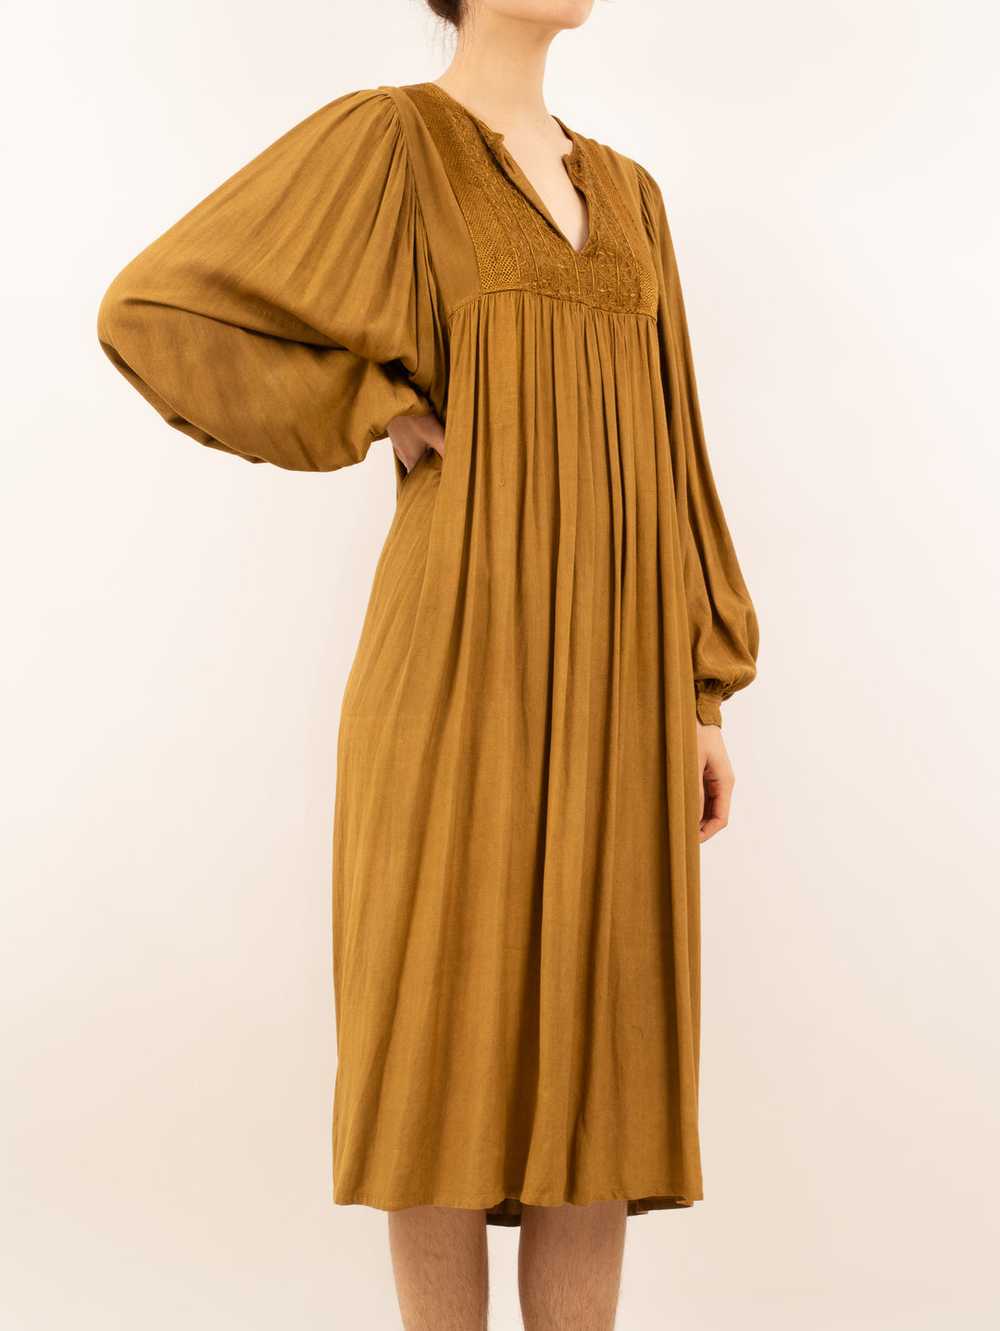 1970's golden caftan dress - image 6